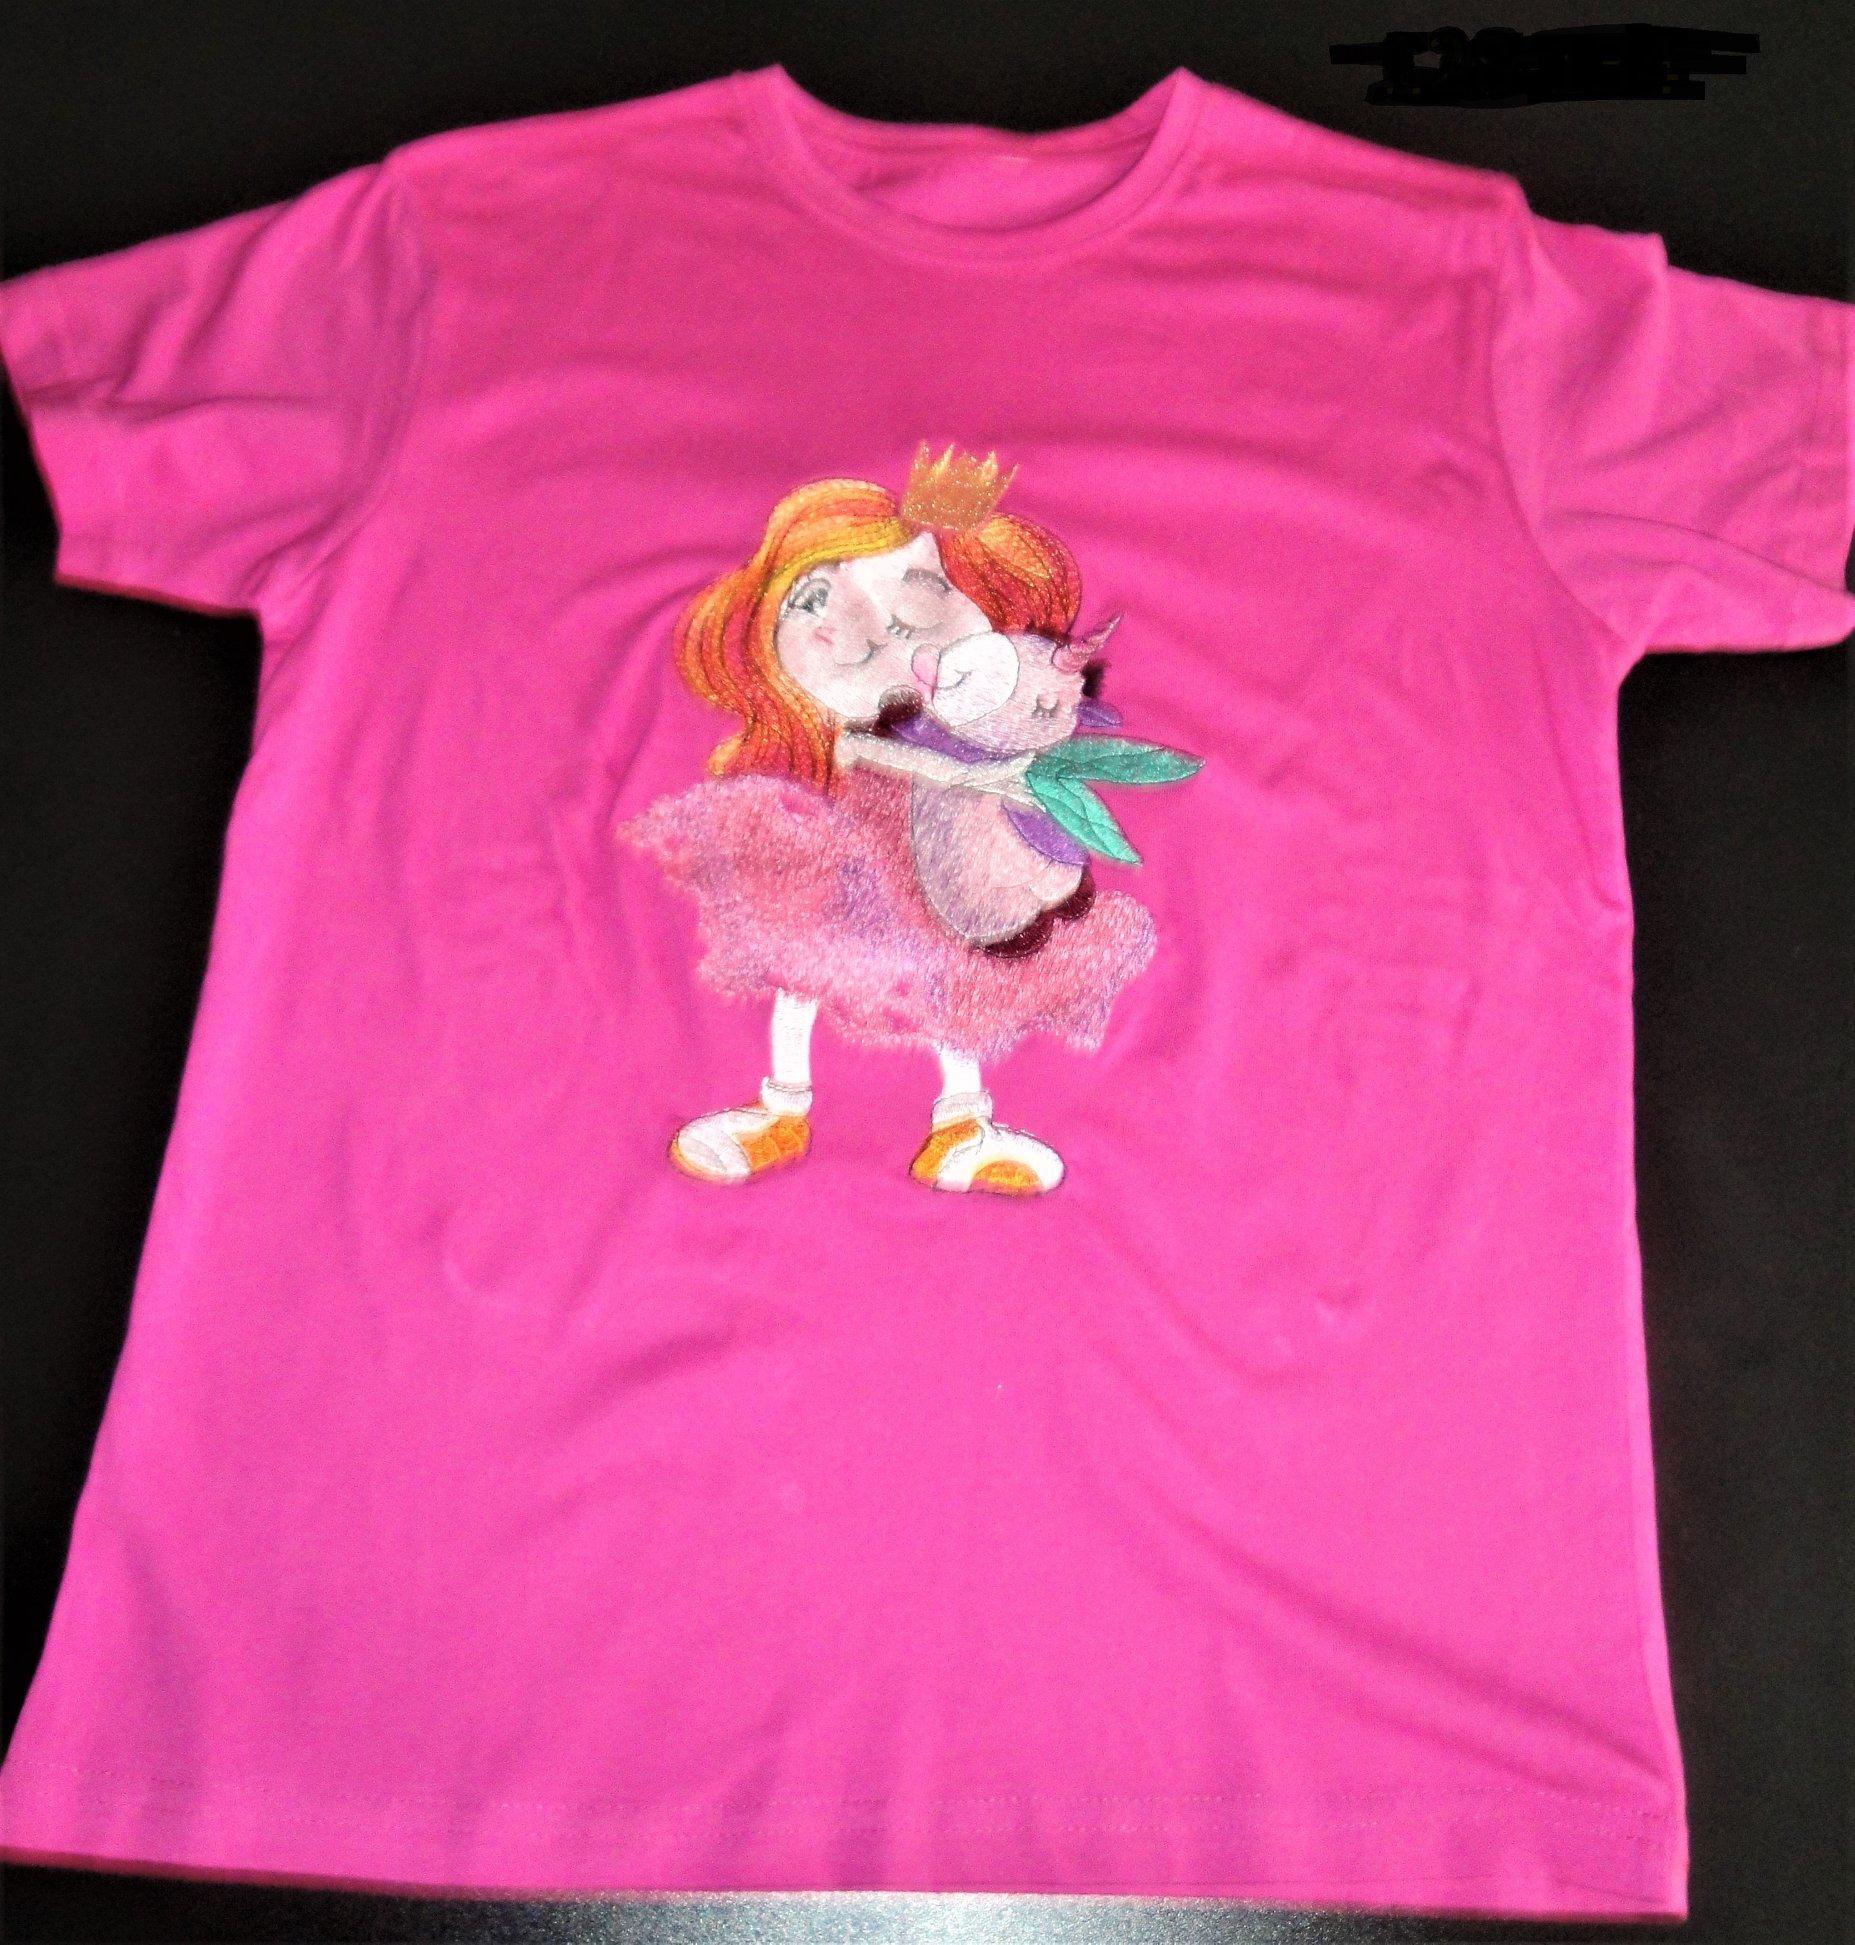 Baby shirt with girl and unicorn design